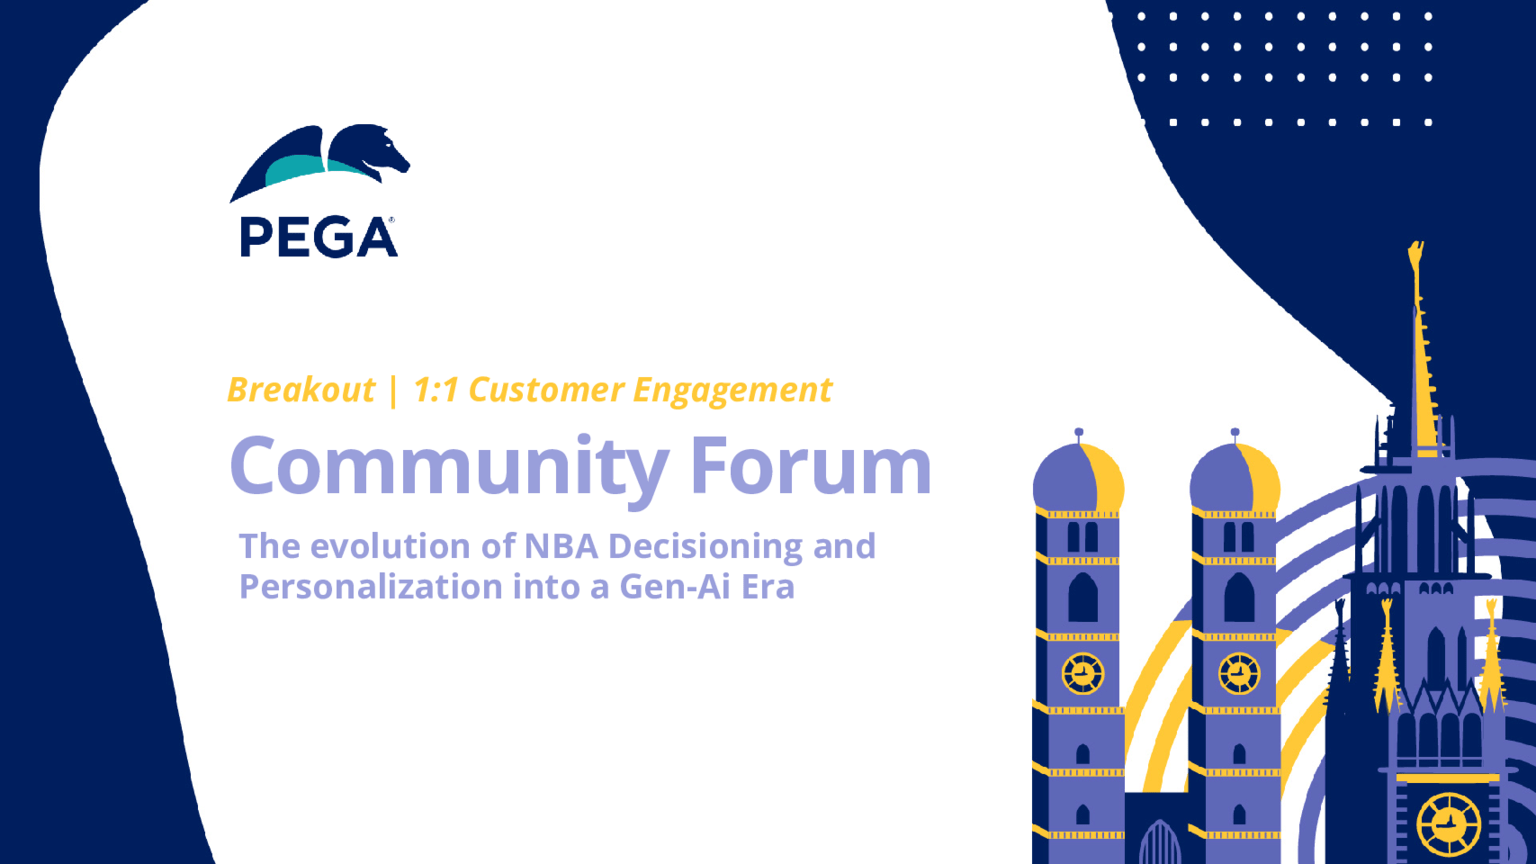 Pega Community Forum - Merkle Keynote: The evolution of NBA Decisioning and Personalization into a Gen-Ai Era (Presentation)